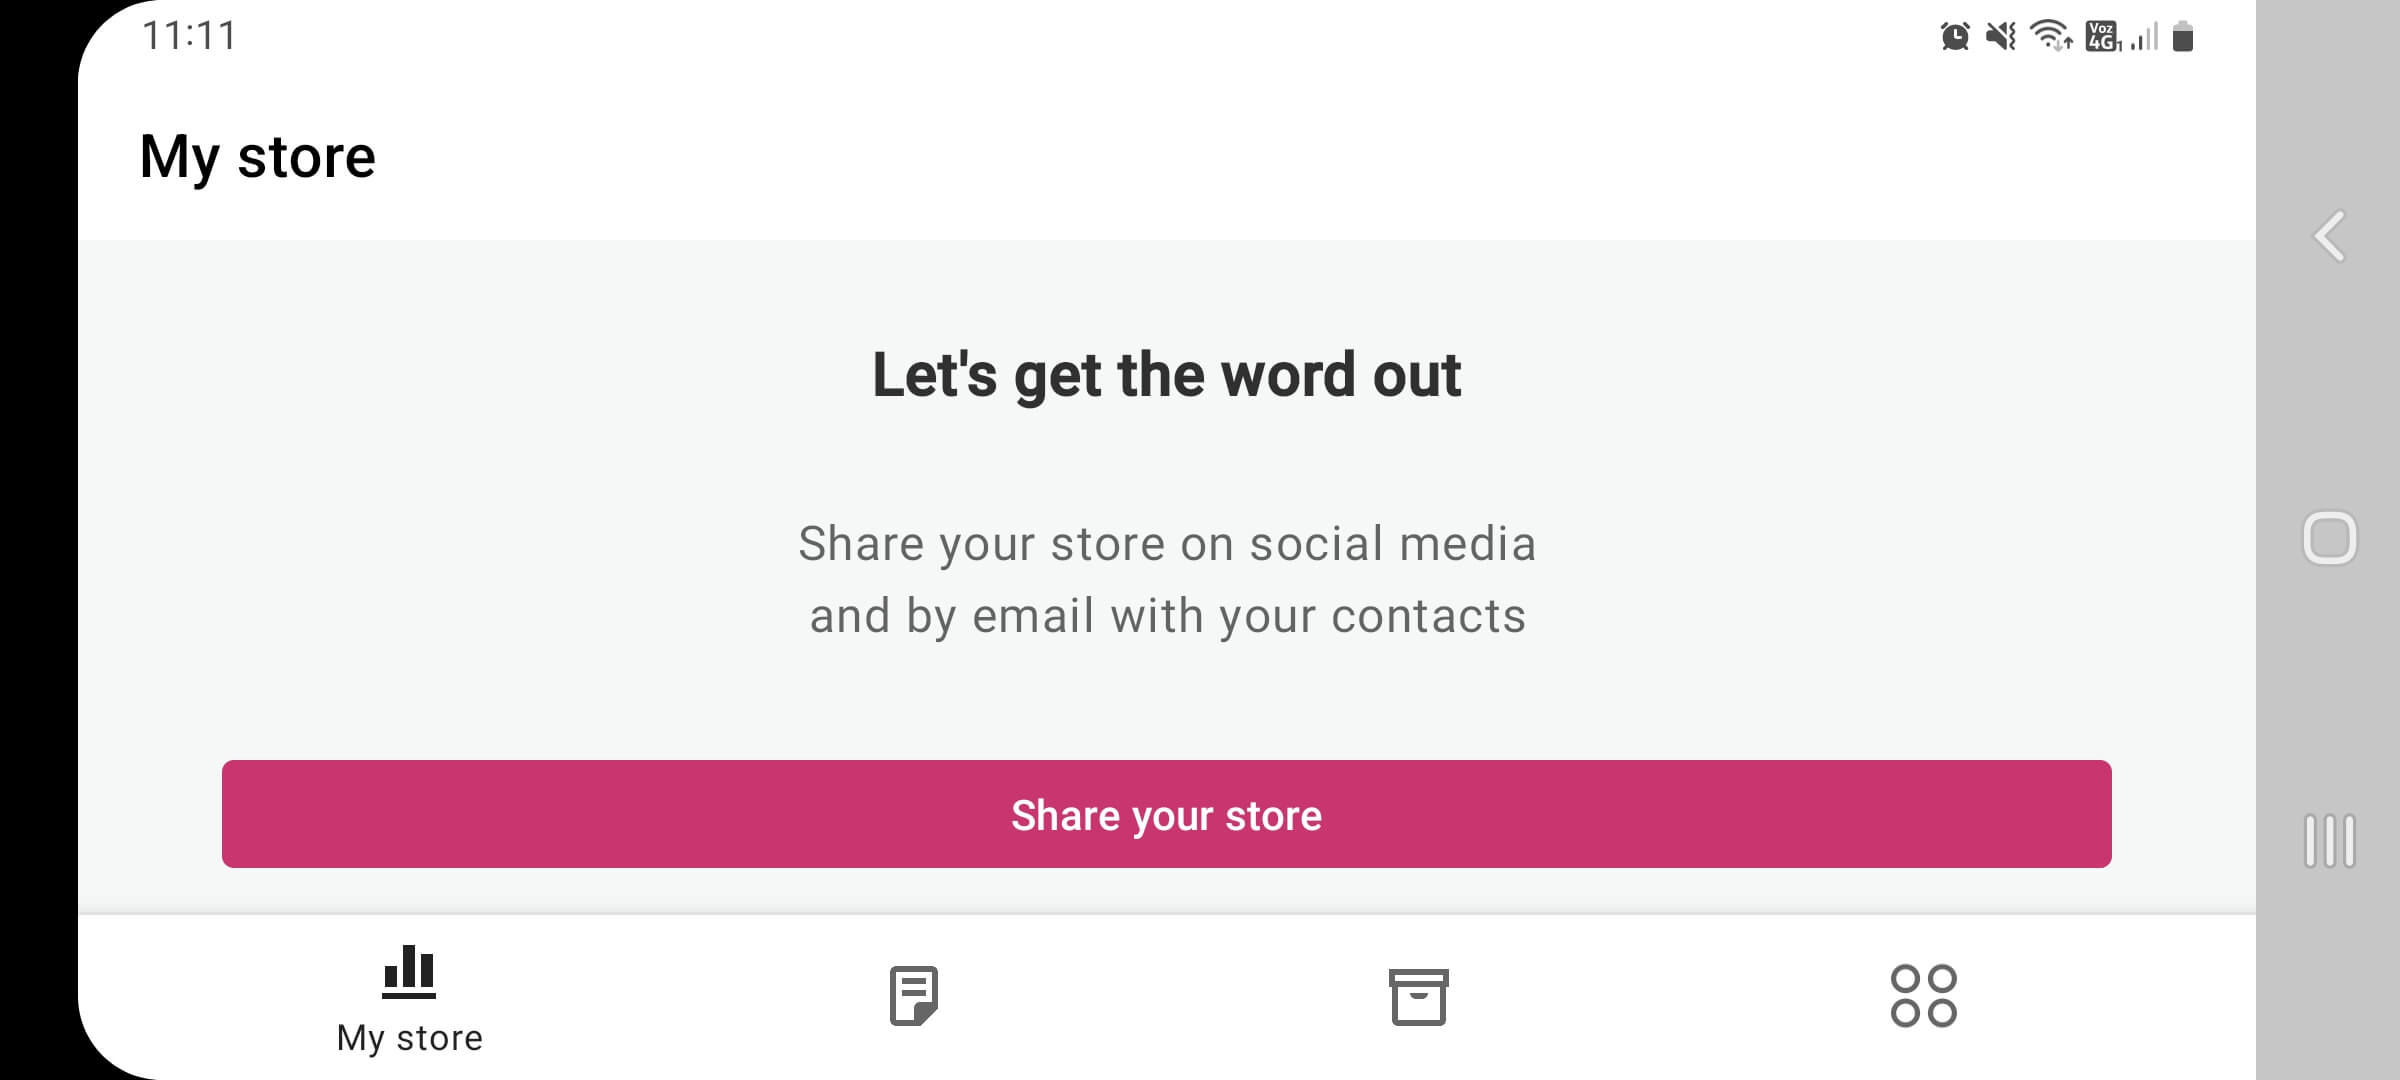 Sharing your store via social media